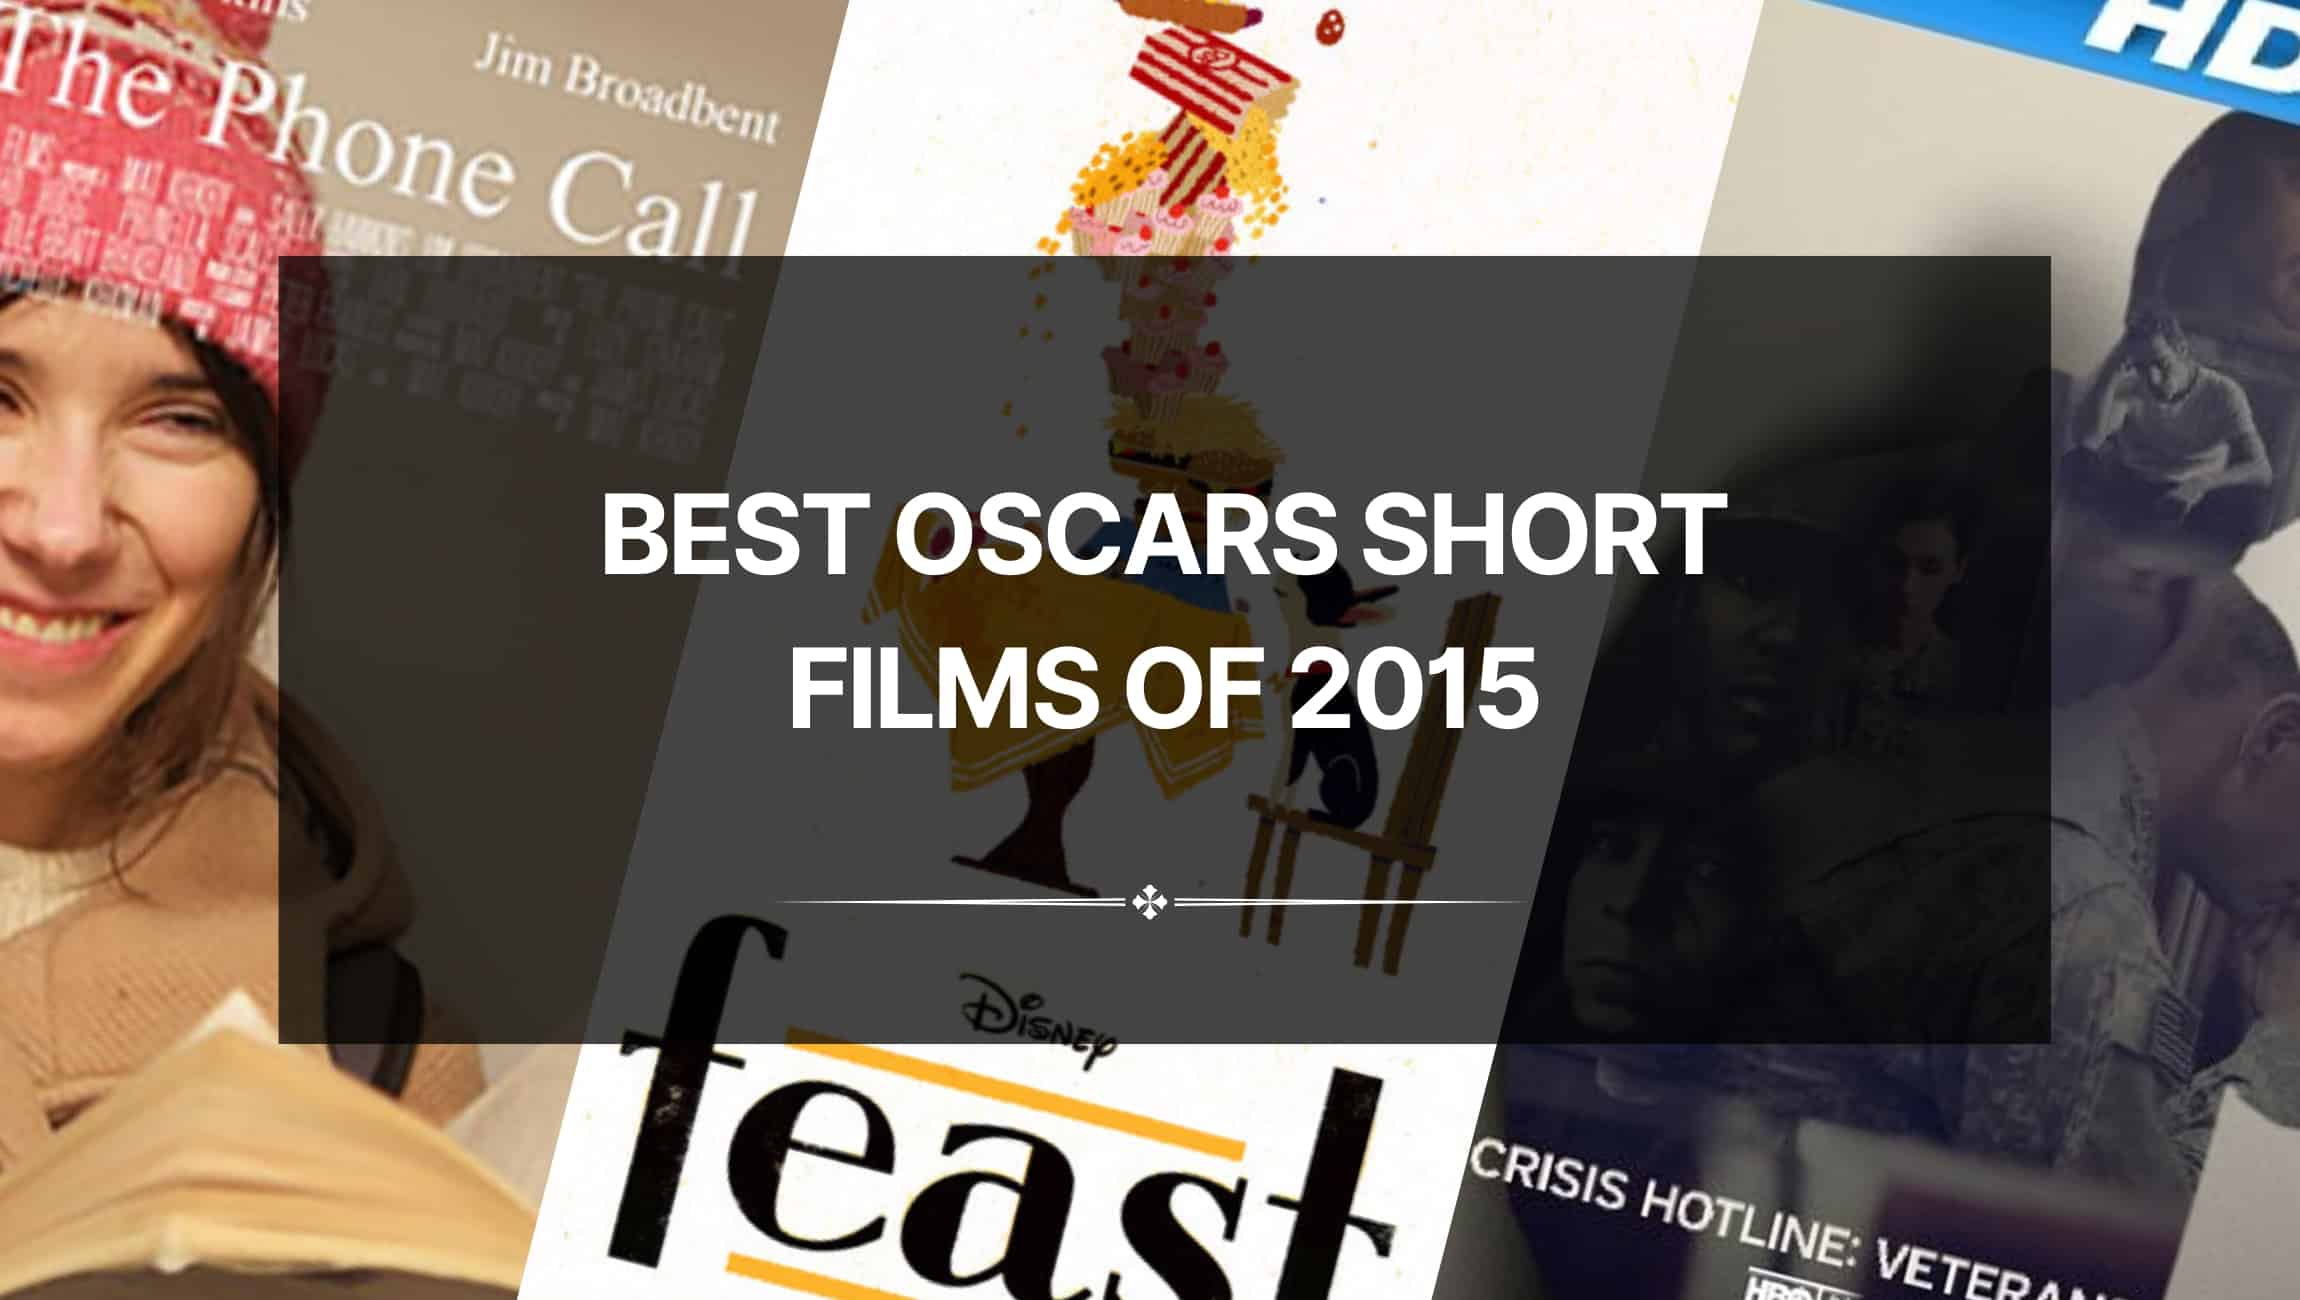 Best Oscars Short Films of 2015